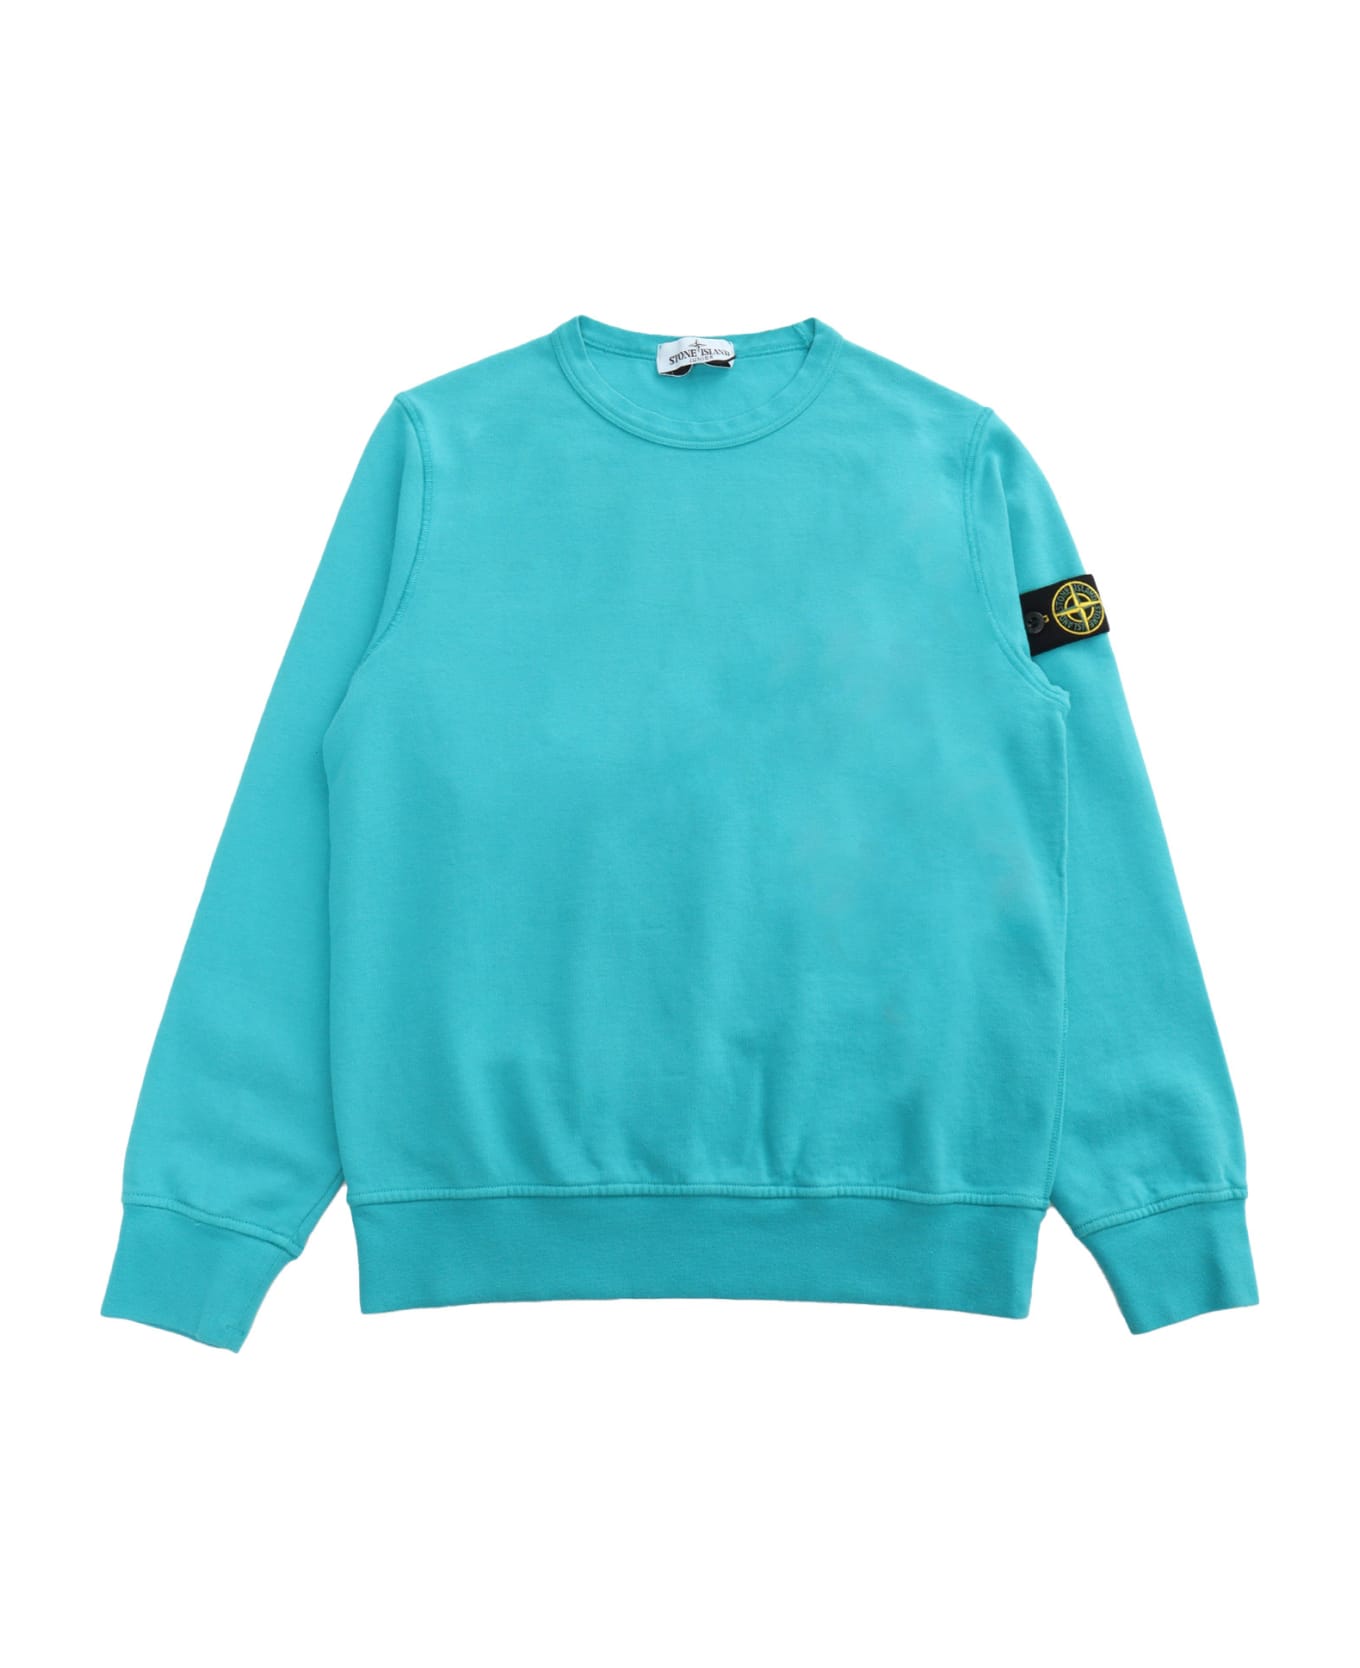 Stone Island Junior Deepl Blue Sweatshirt - TURQUOISE